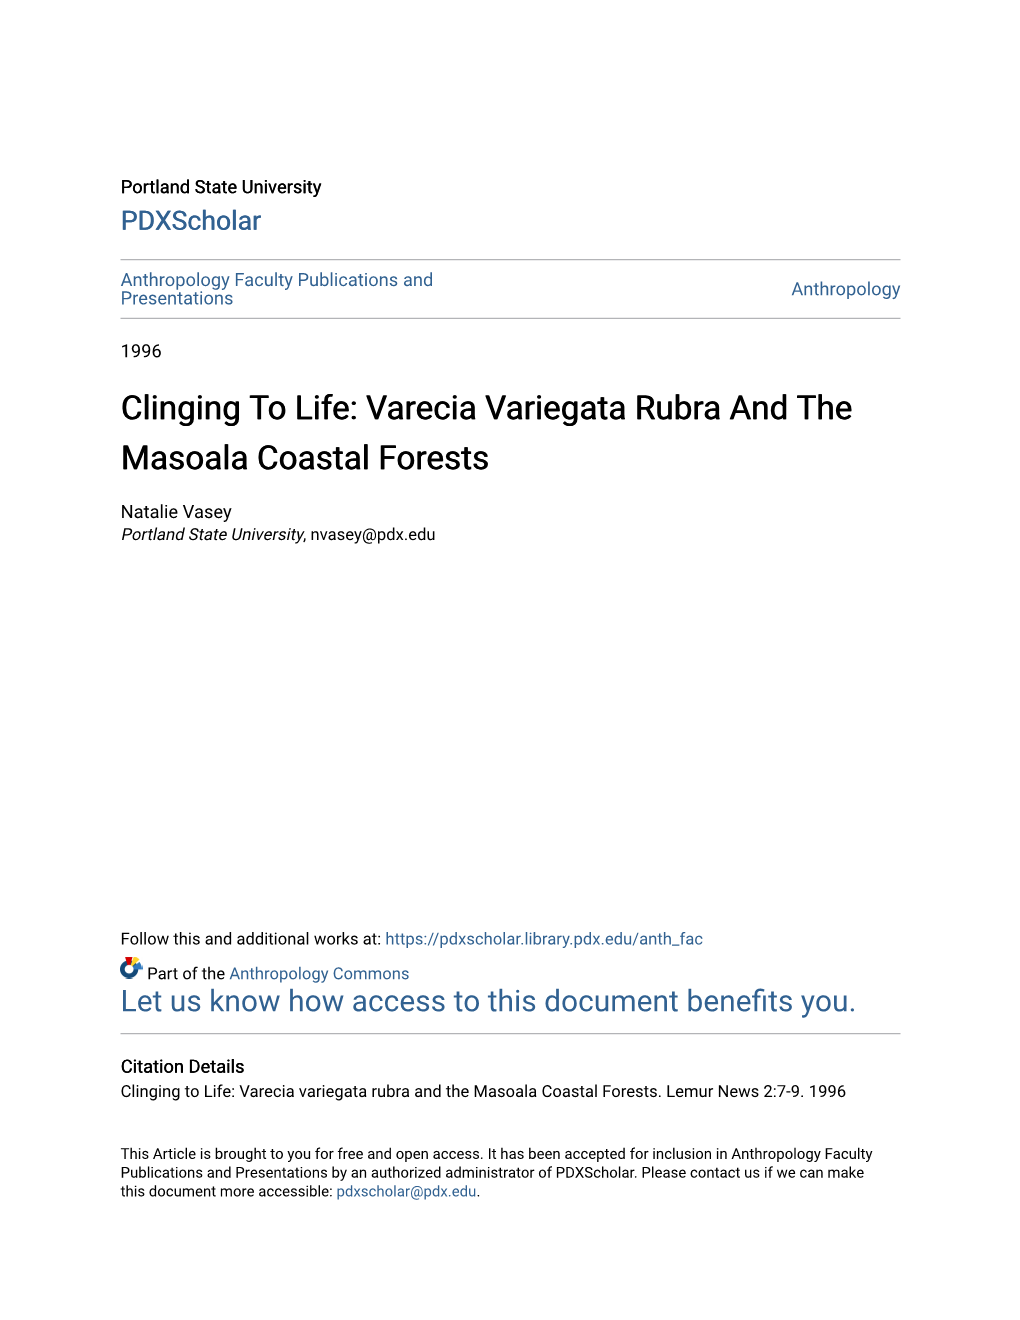 Varecia Variegata Rubra and the Masoala Coastal Forests